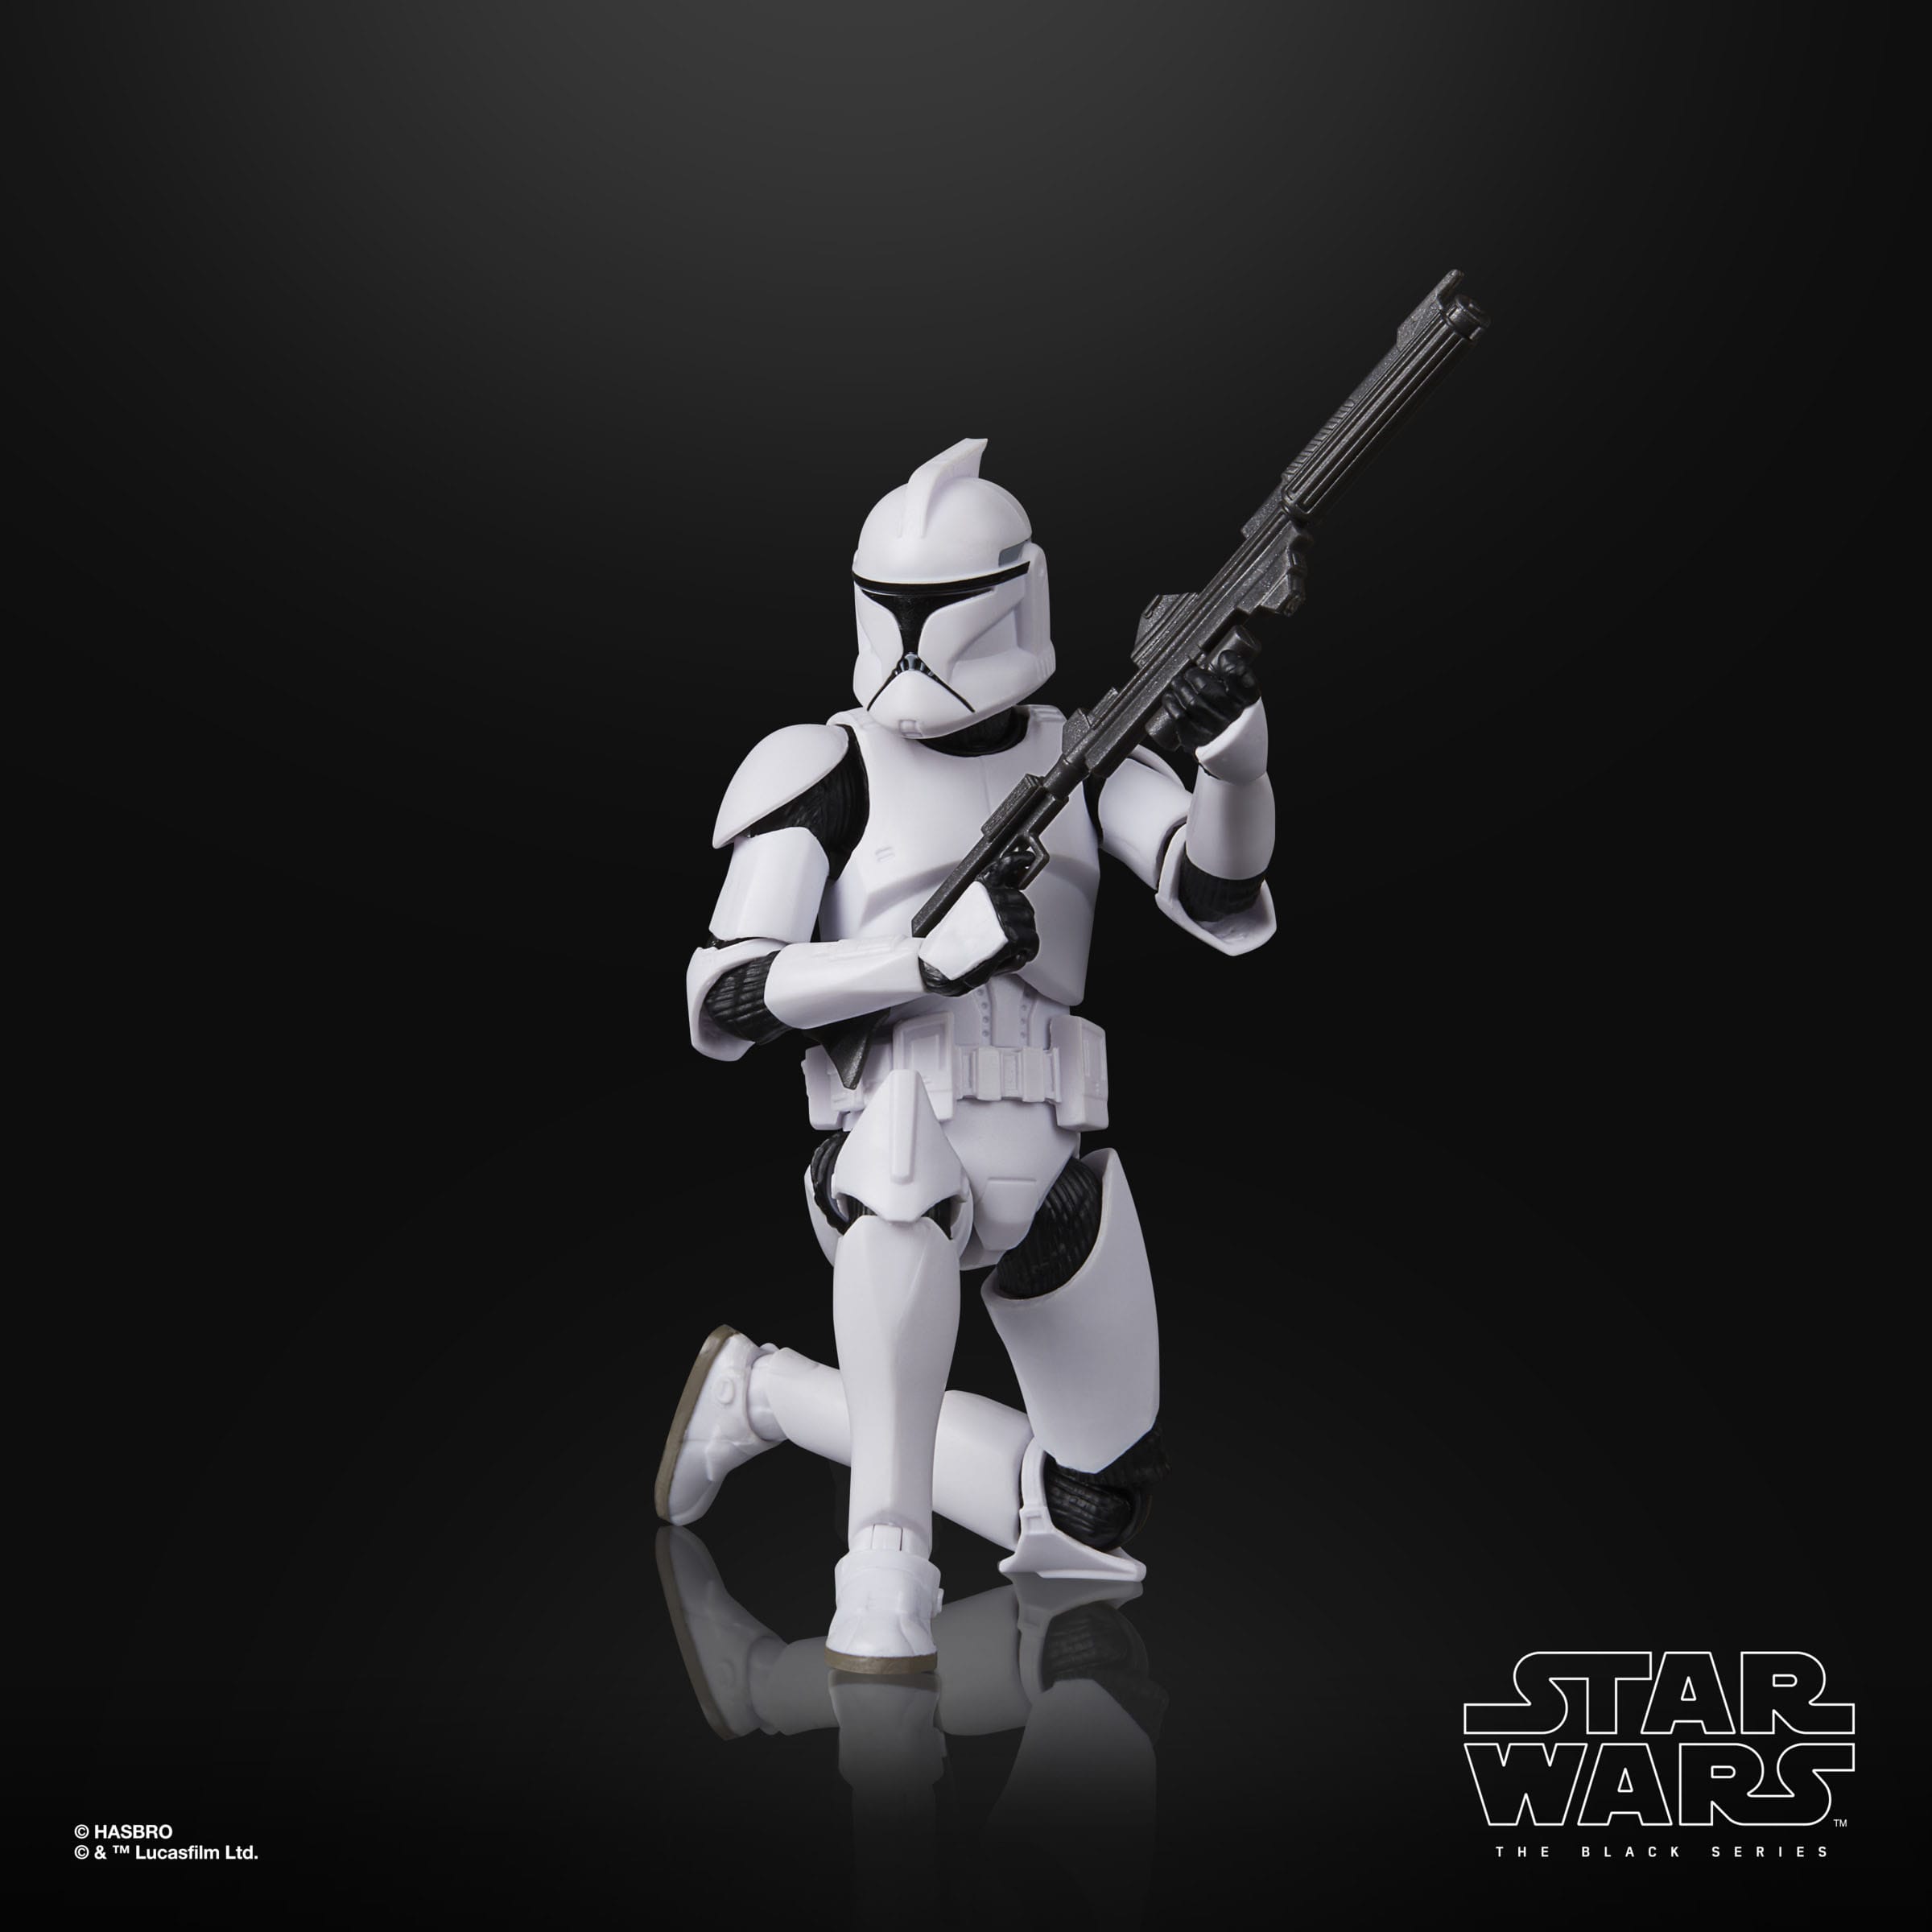 Star Wars Episode II Black Series Actionfigur Phase I Clone Trooper 15 cm HASG0022 5010996227478